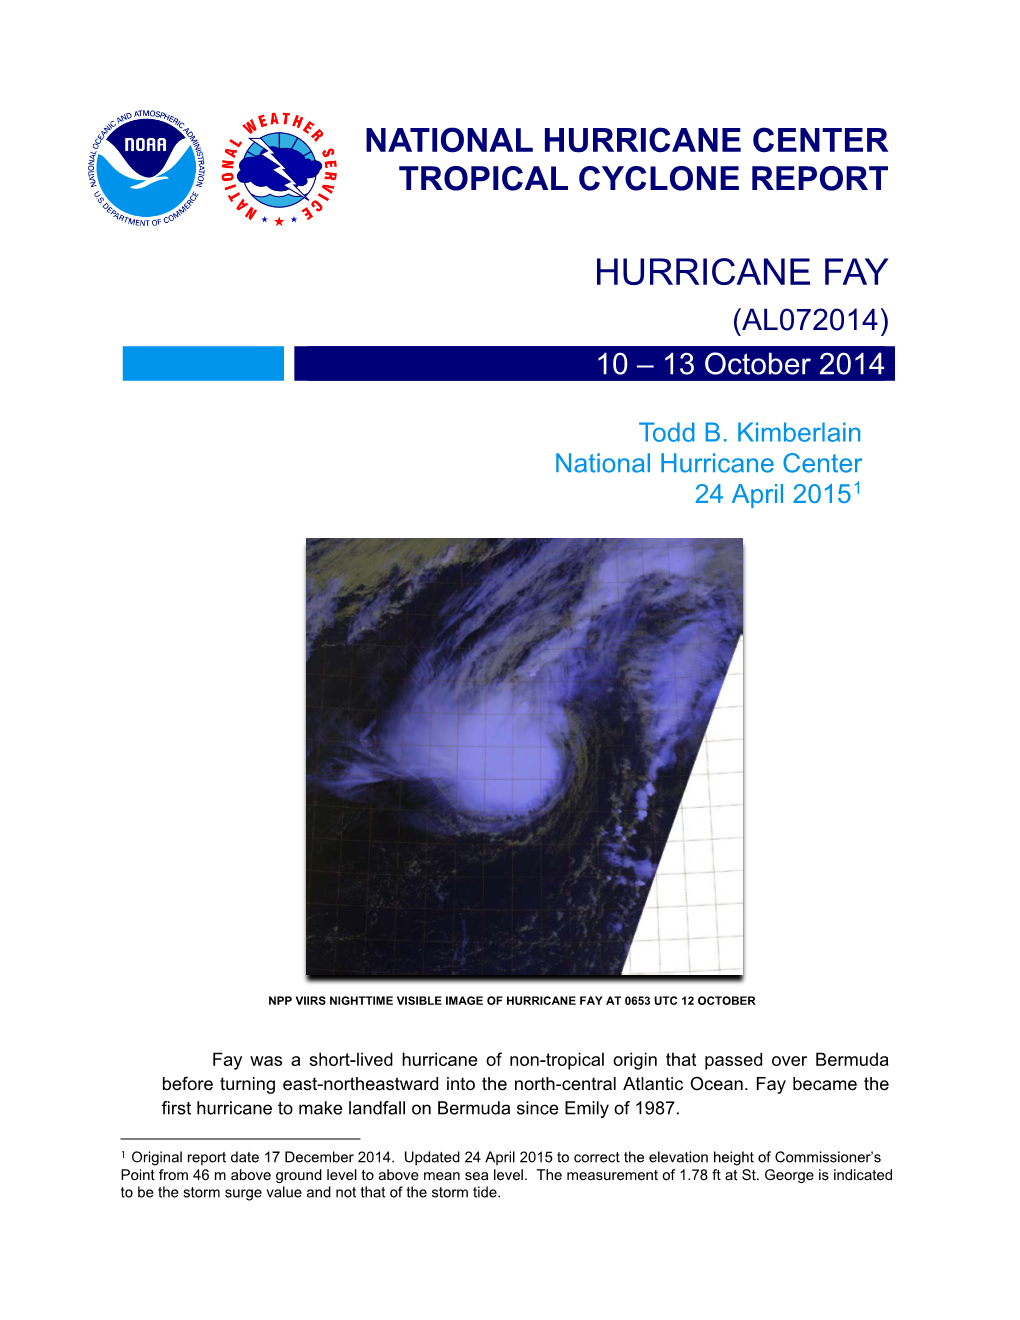 Hurricane Center Tropical Cyclone Report